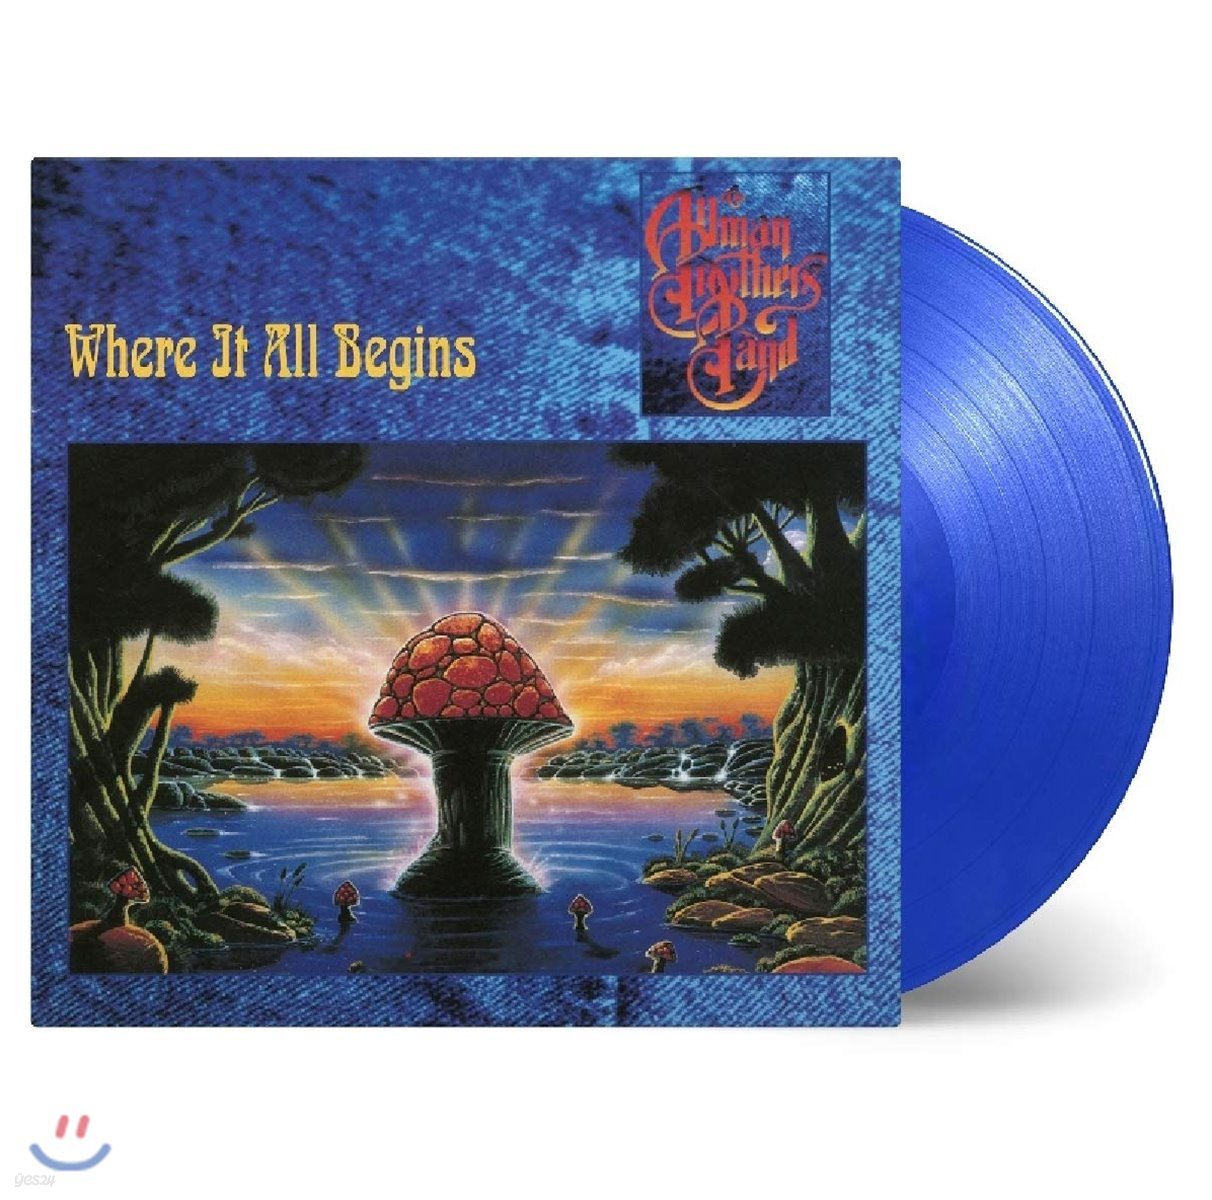 Allman Brothers Band (올맨 브라더스 밴드) - Where It All Begins 11집 [투명 블루 컬러 2LP]